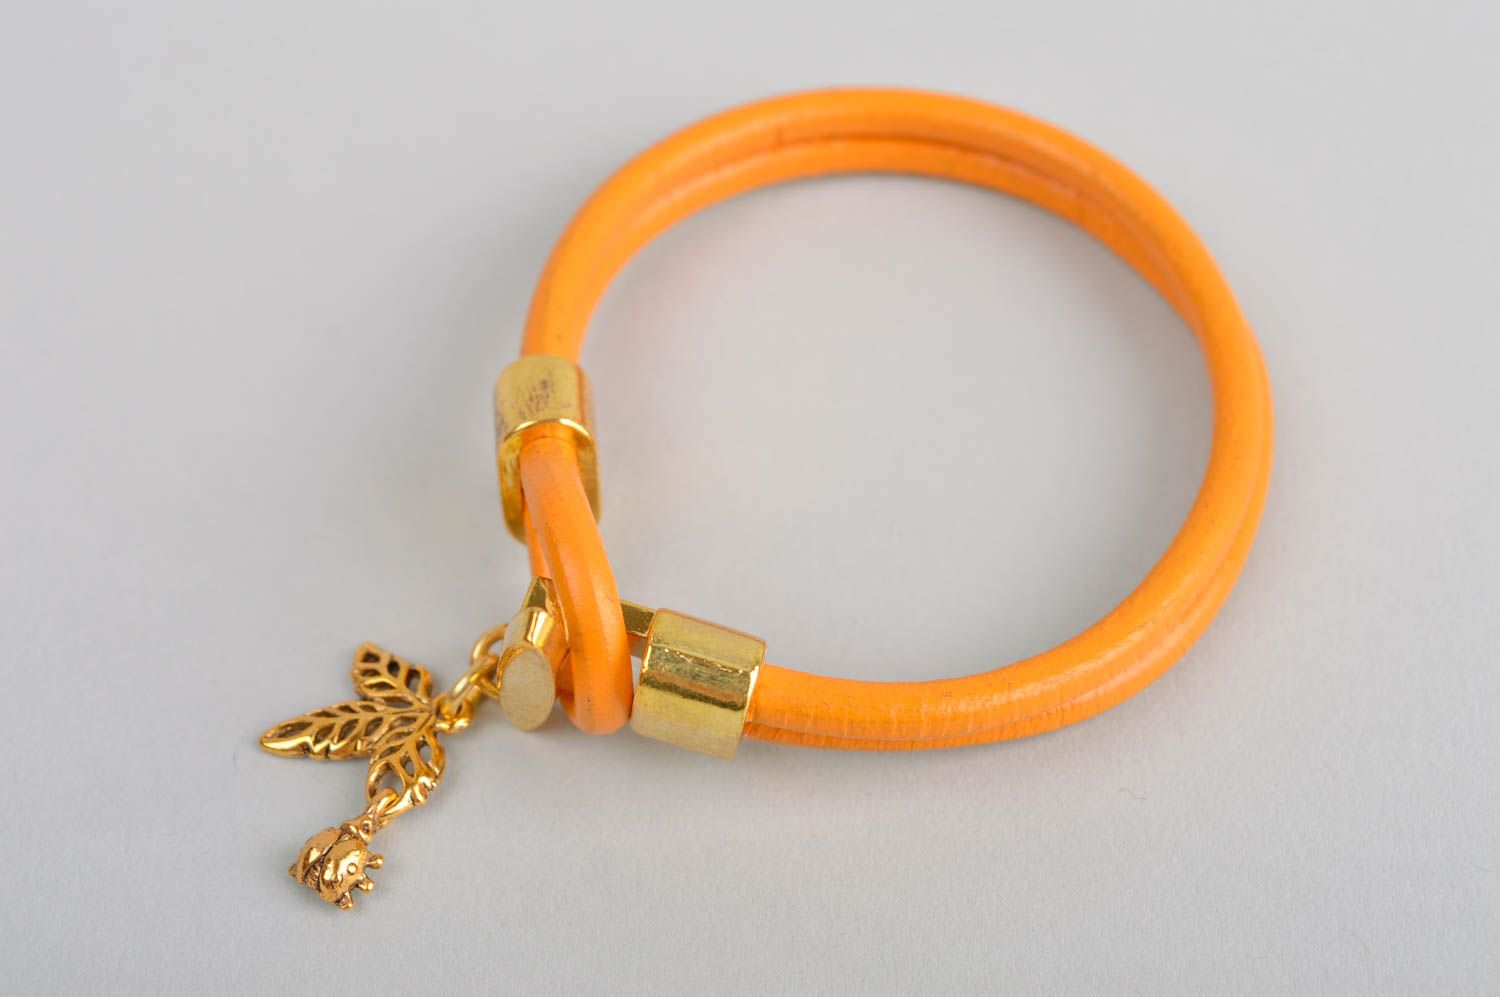 Handmade leather wrist bracelet artisan jewelry designs accessories for girls photo 2